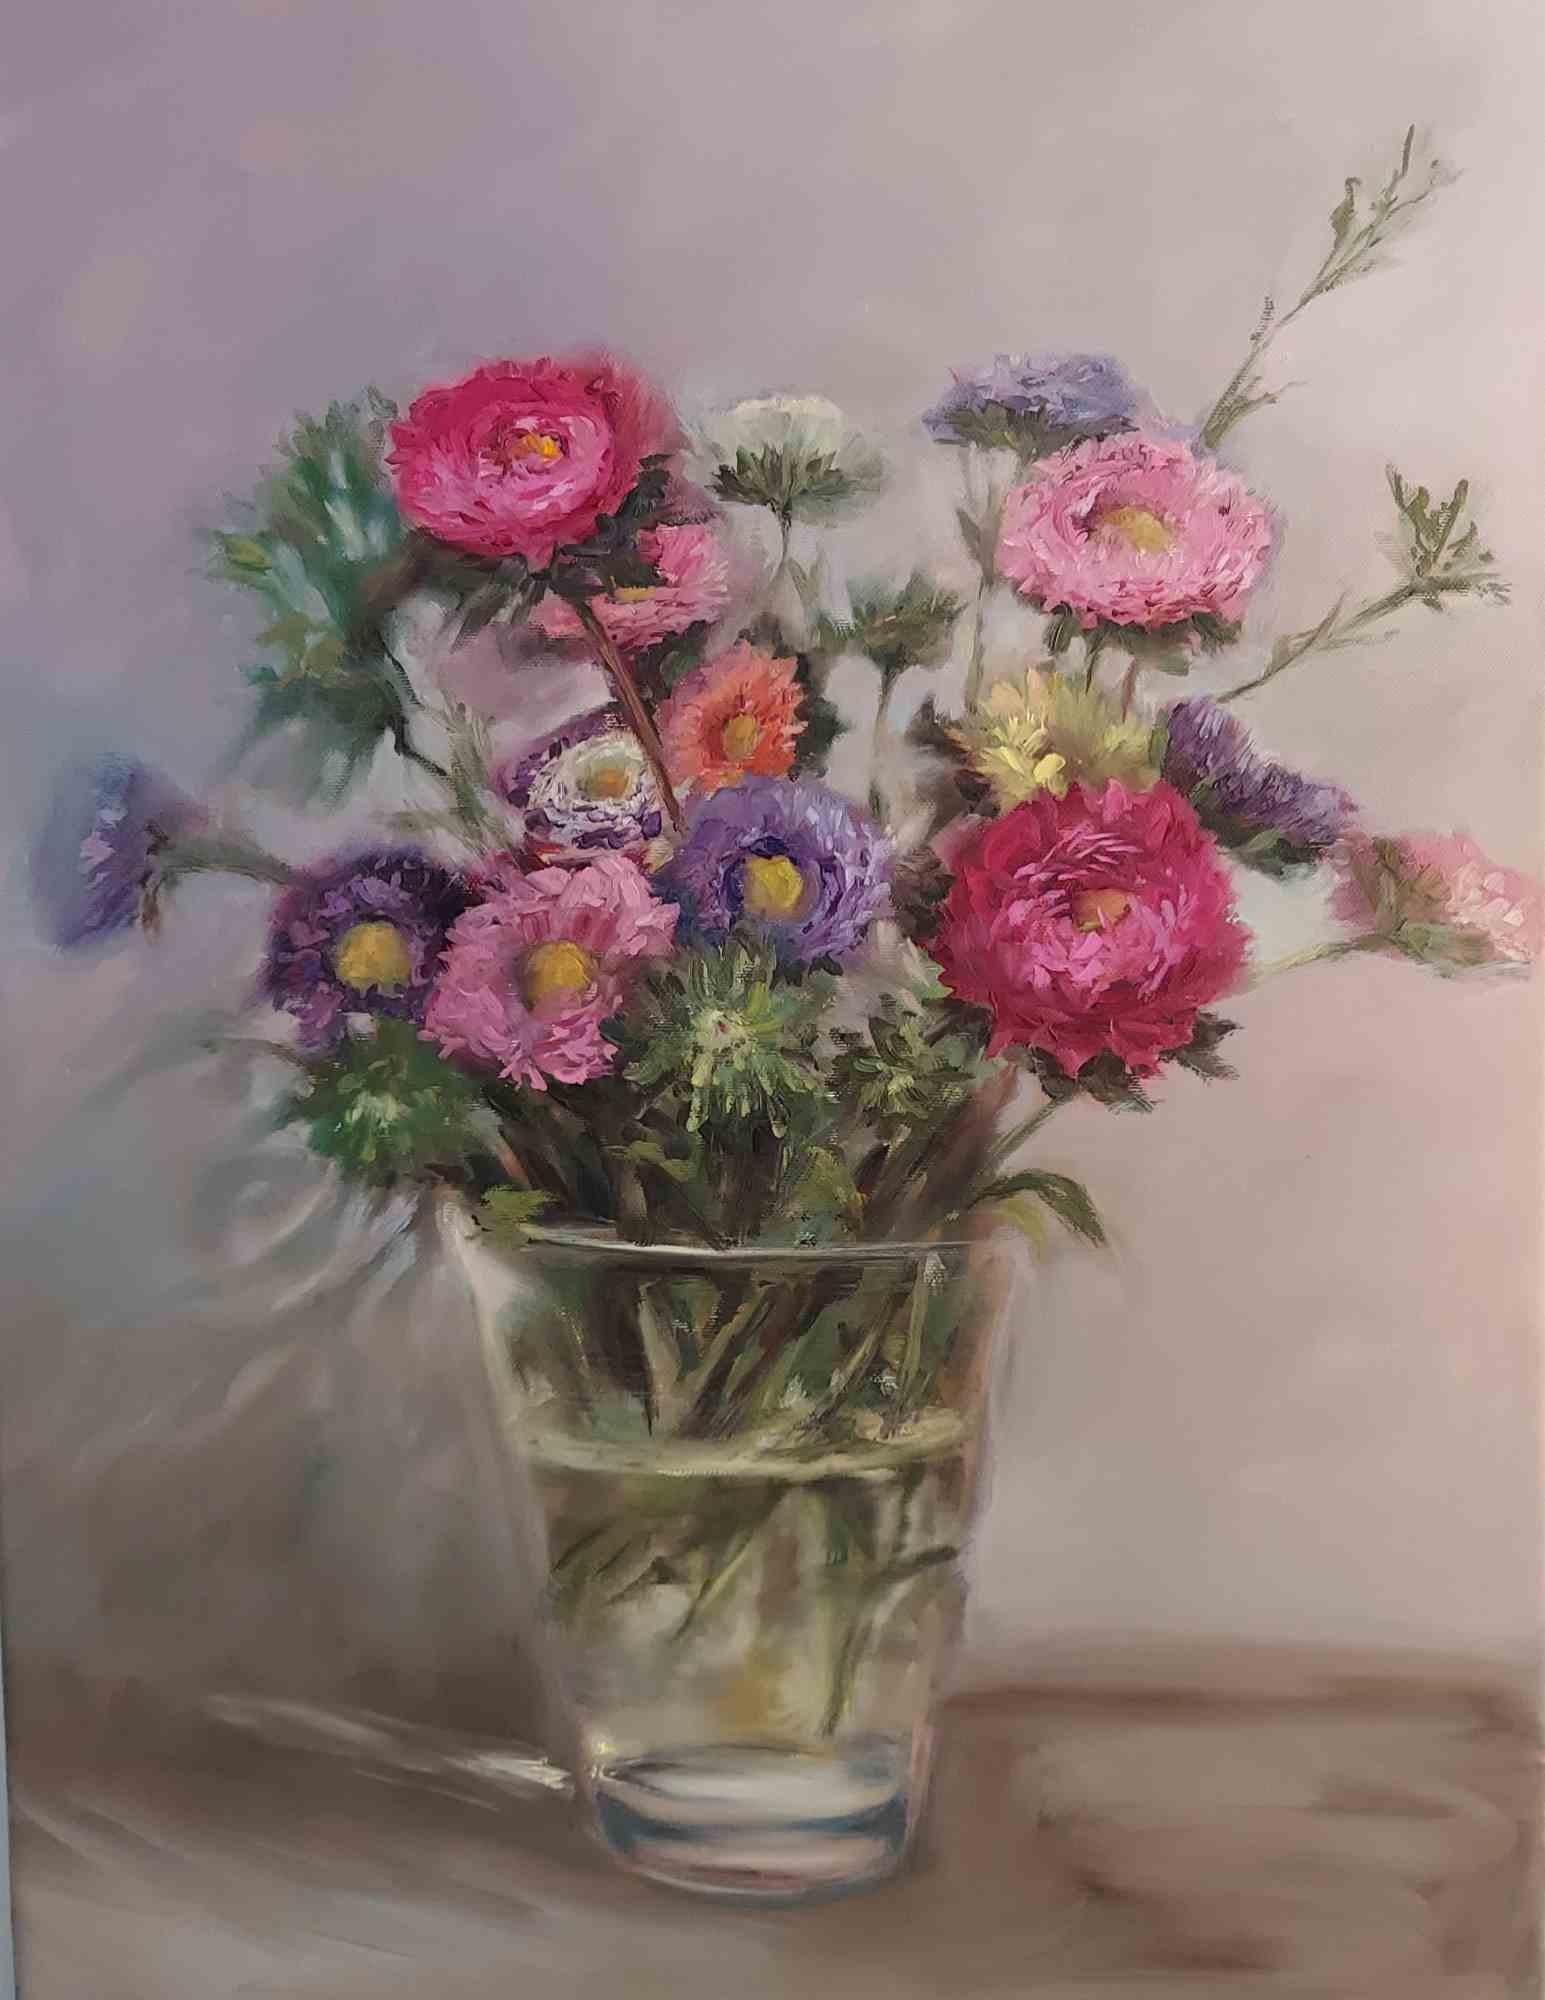 Happy Flowers - Oil Painting by Elena Mardashova - 2020